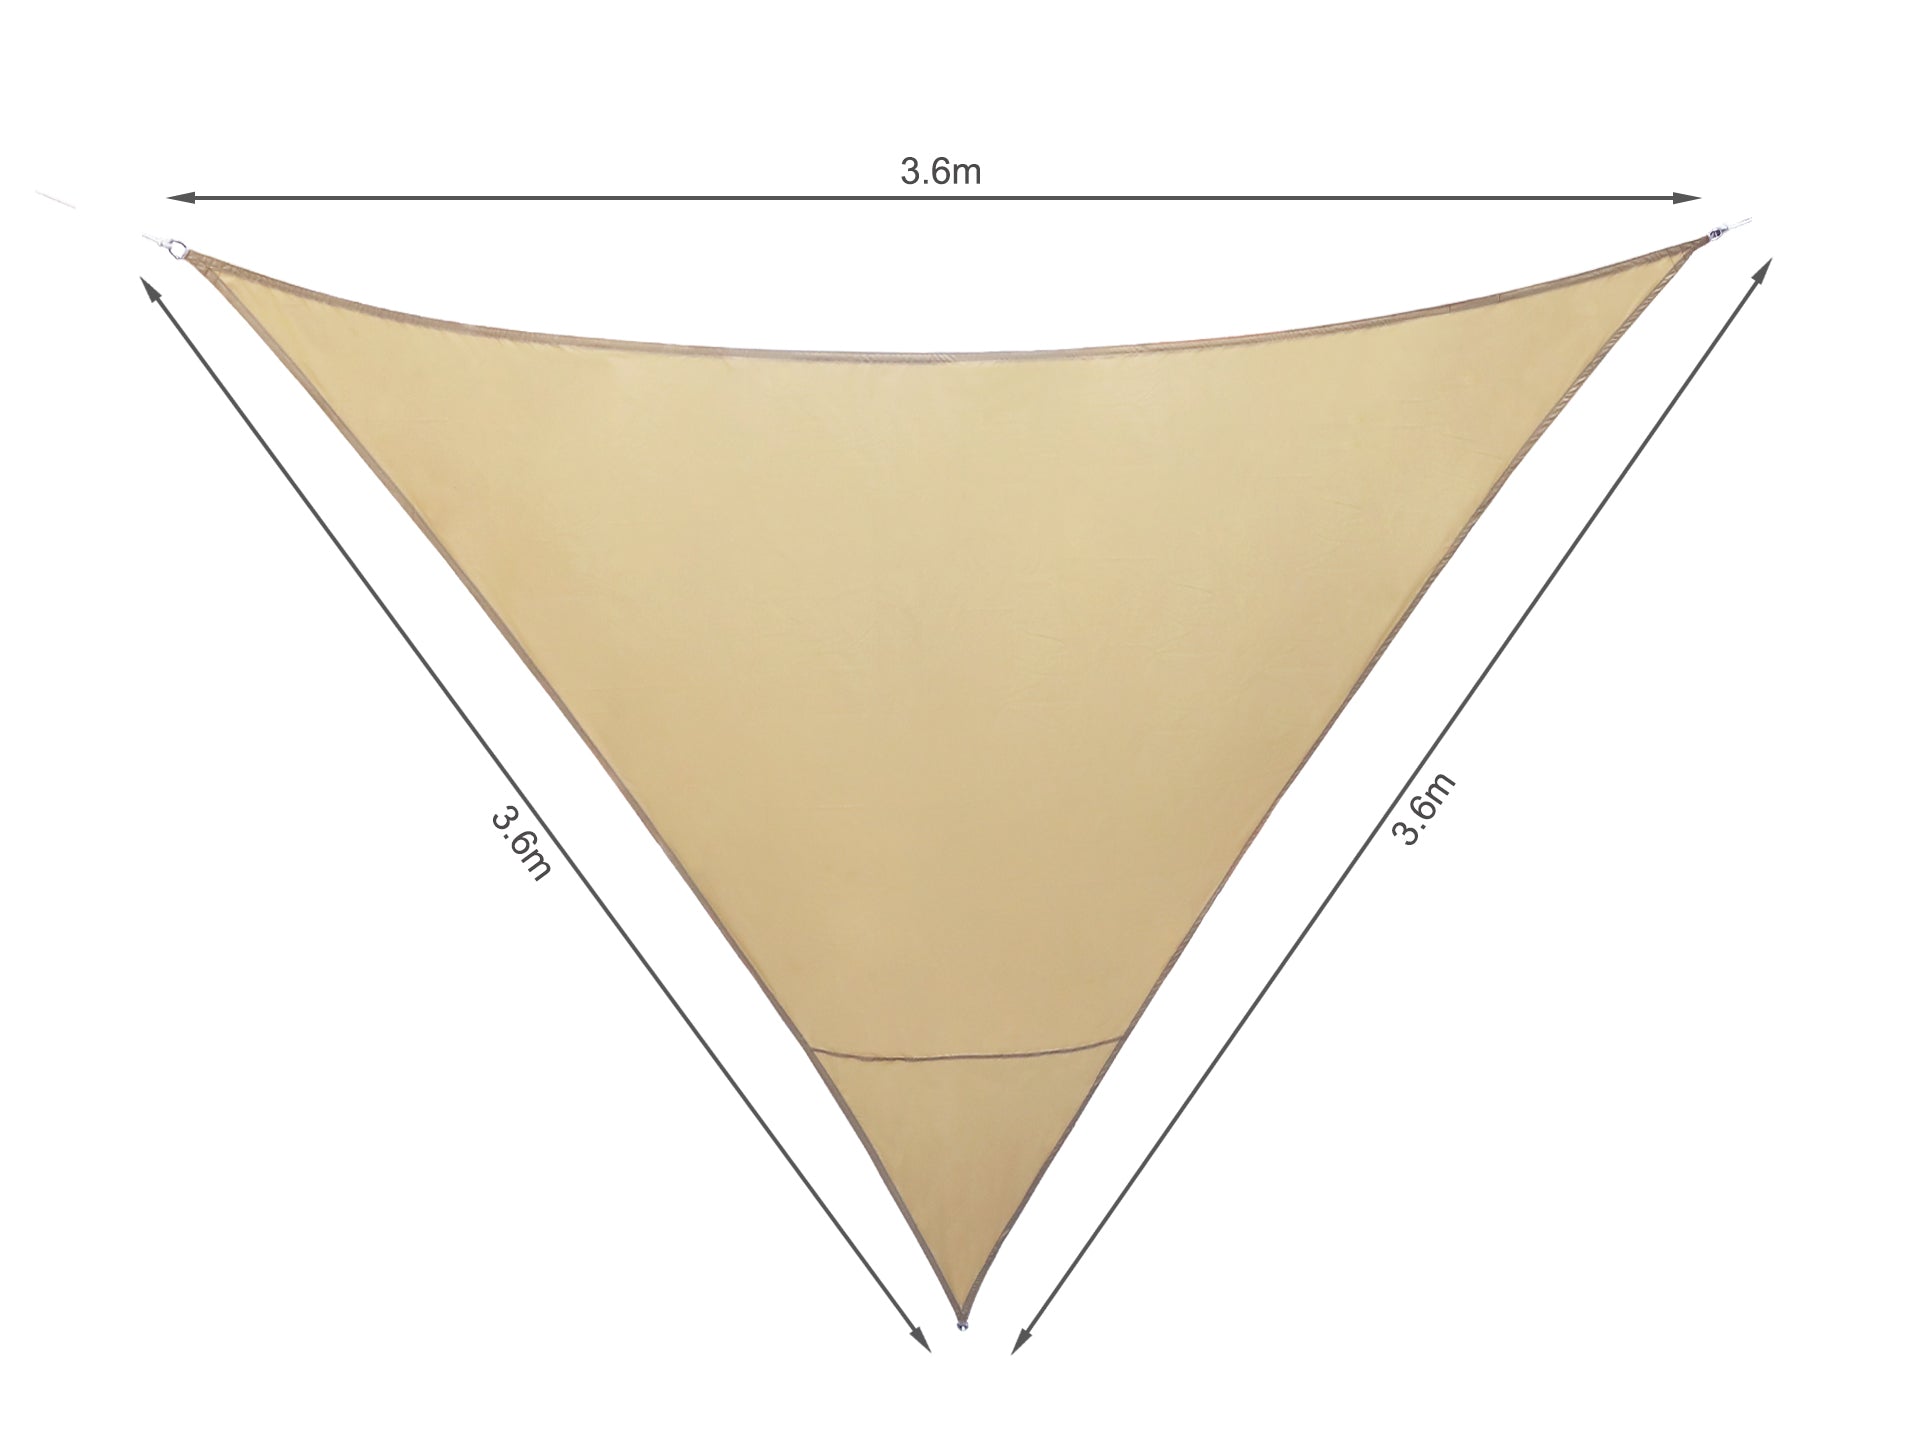 TOUGHOUT Serein Waterproof Triangle Shade Sail 3.6m x 3.6m x 3.6m - SAND